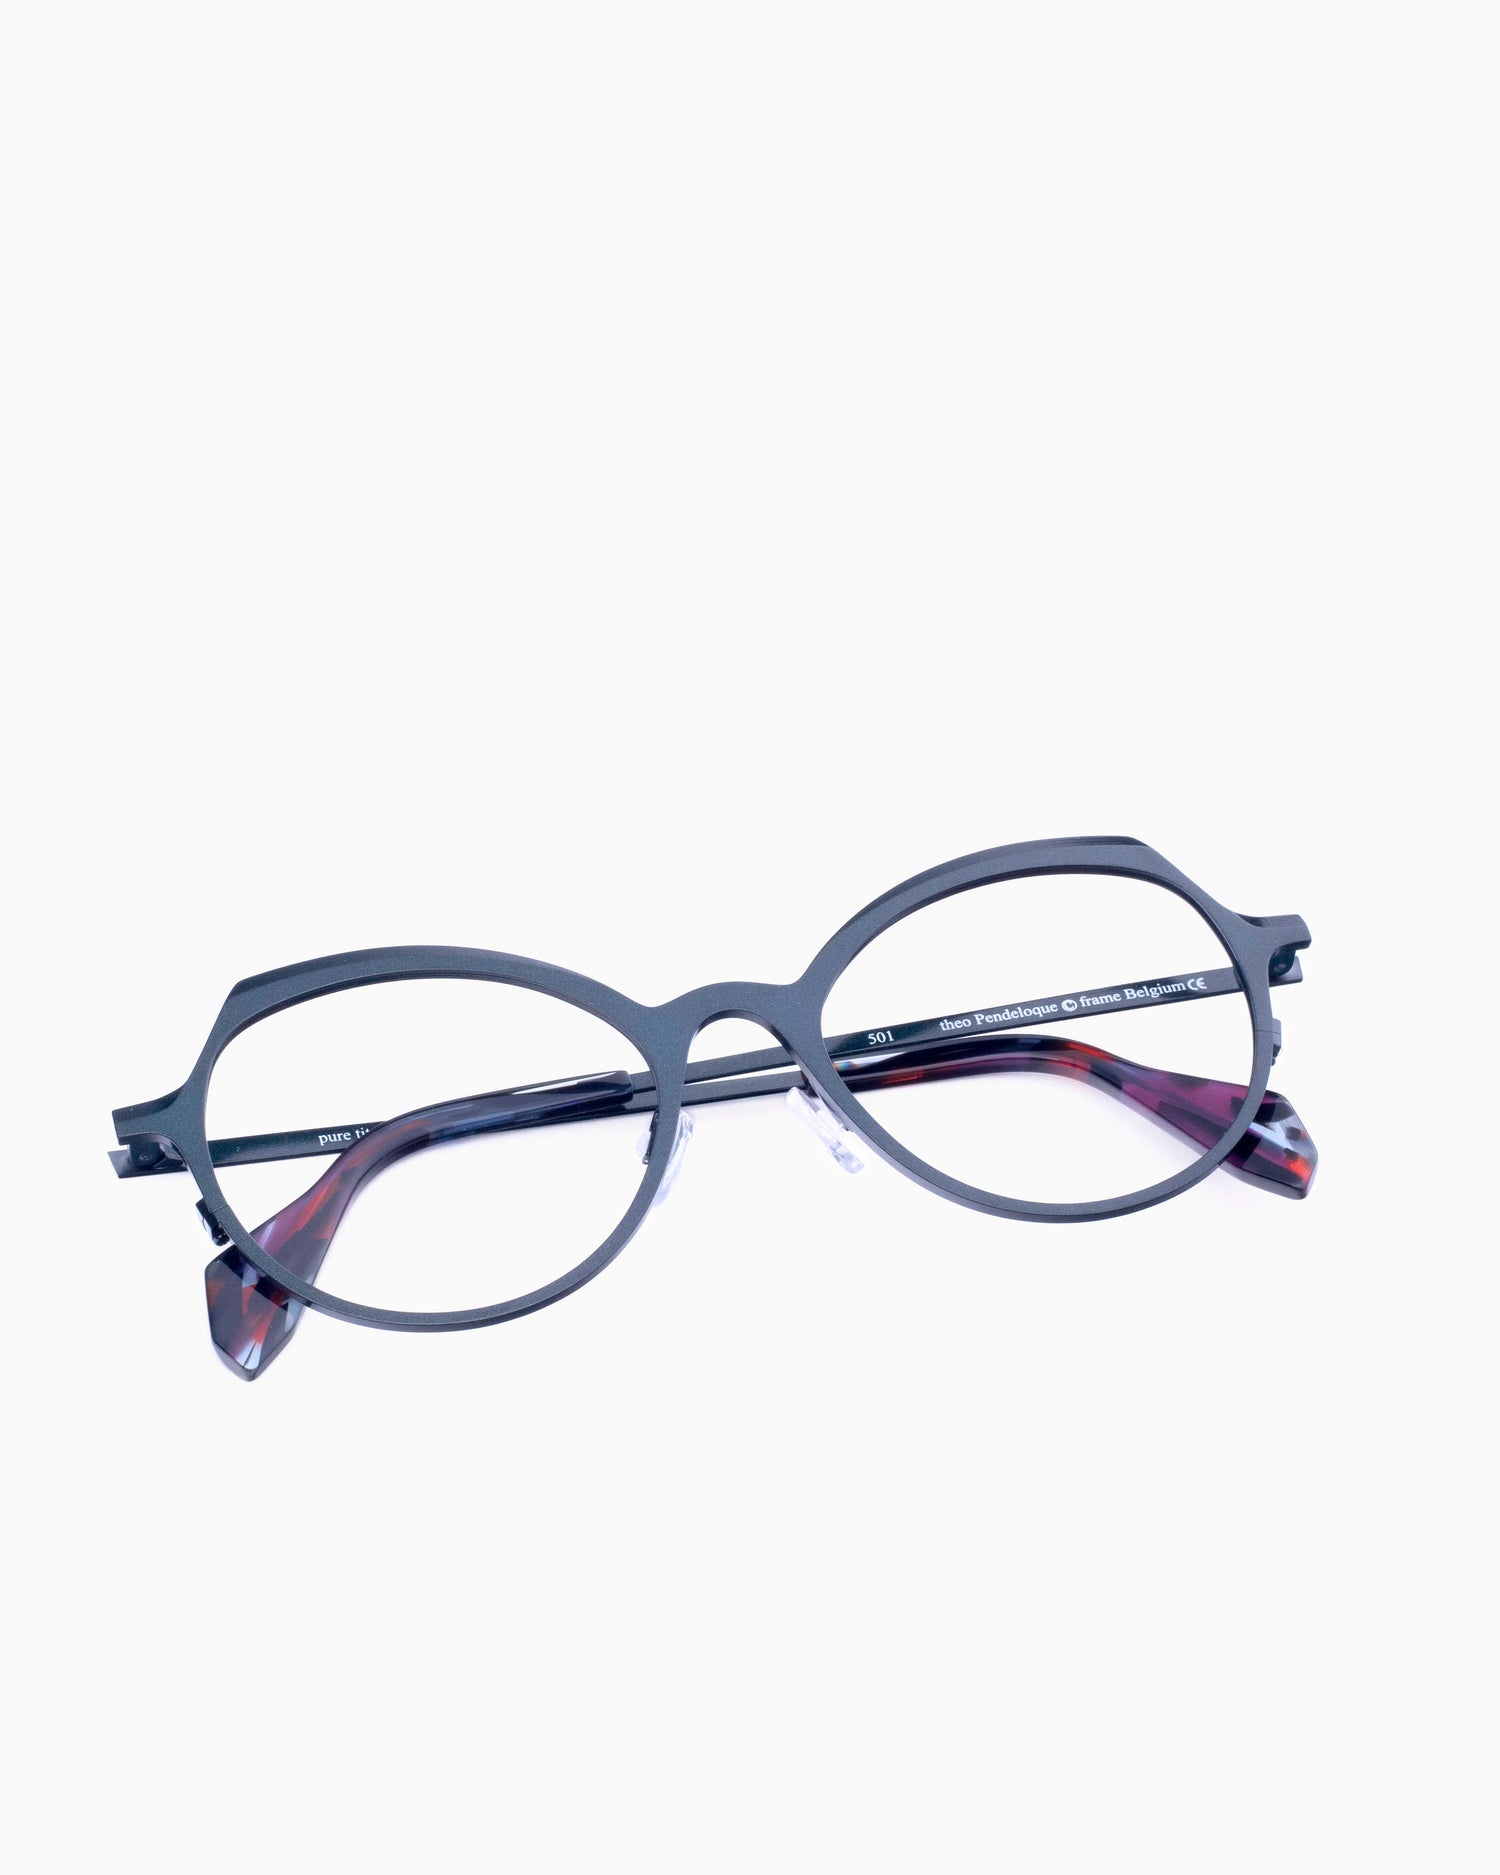 Theo - Pendeloque - 501 | Bar à lunettes:  Marie-Sophie Dion